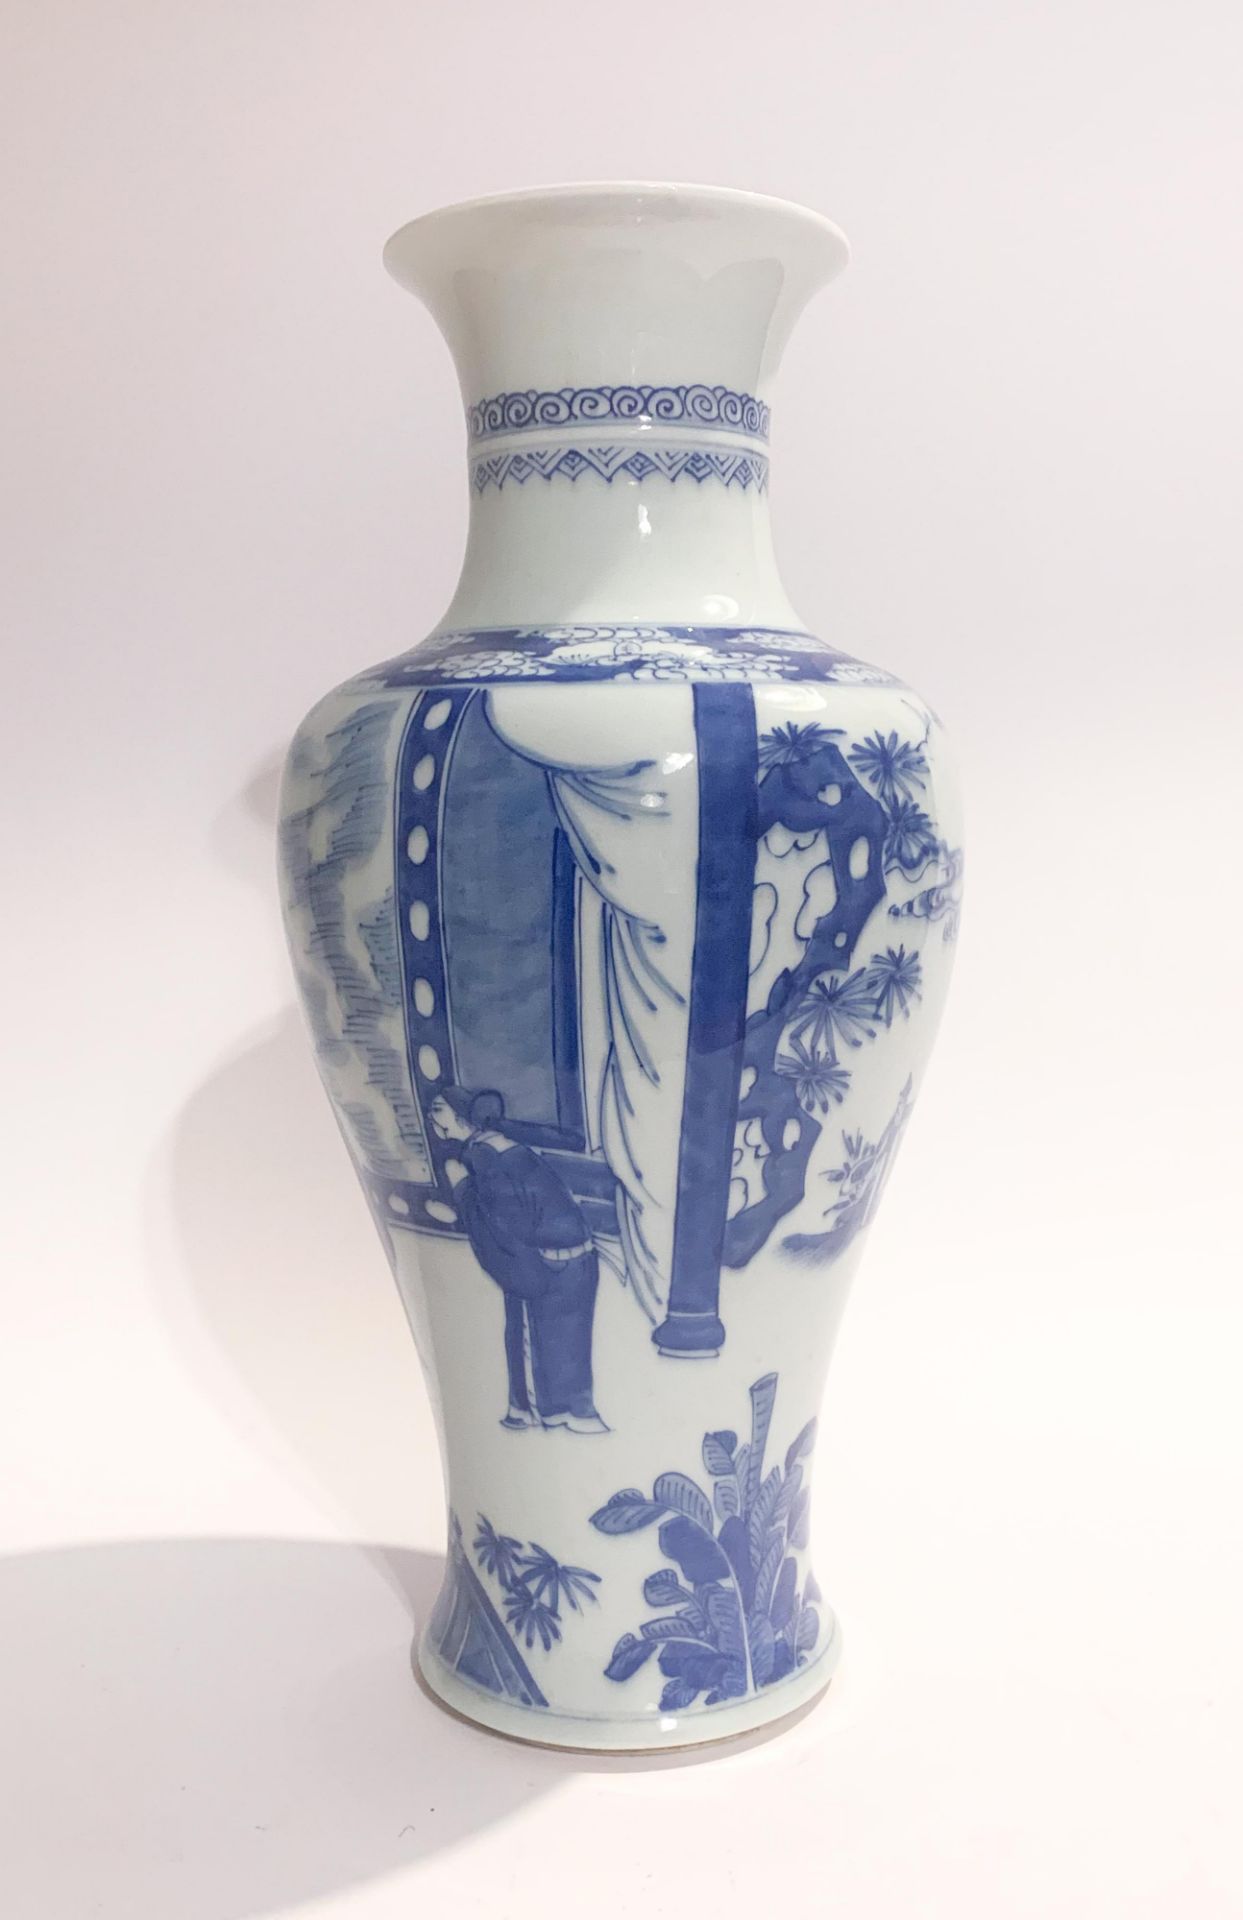  Floor vase China Qing dynasty 19th century - Image 5 of 11